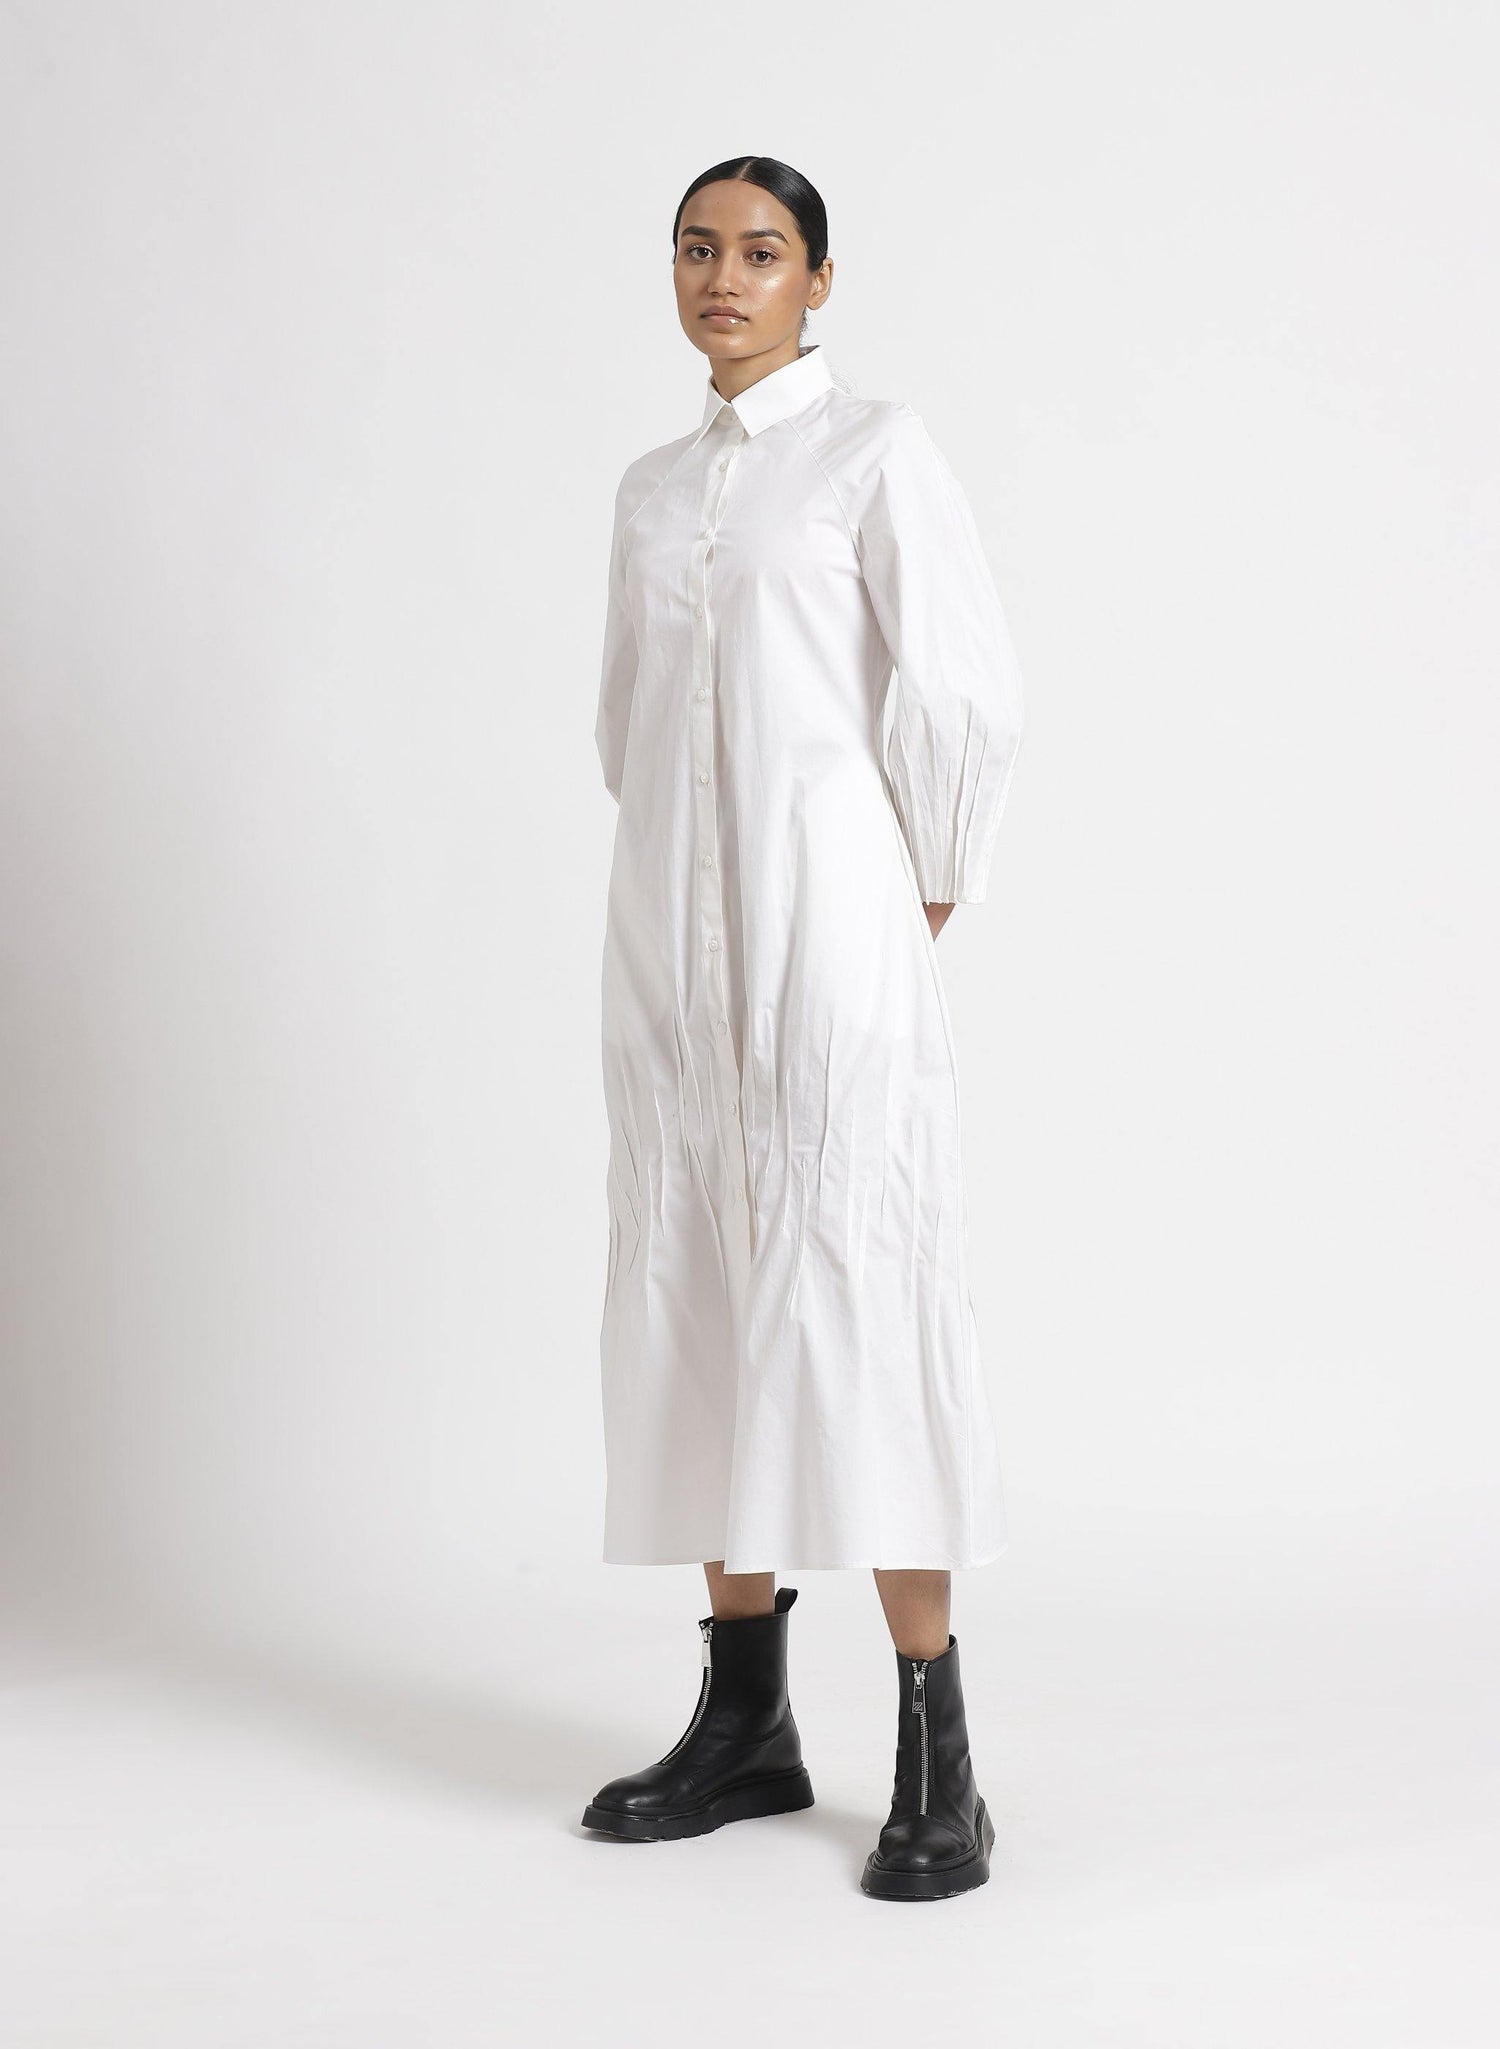 Armilla Dress- Genes online store 2020